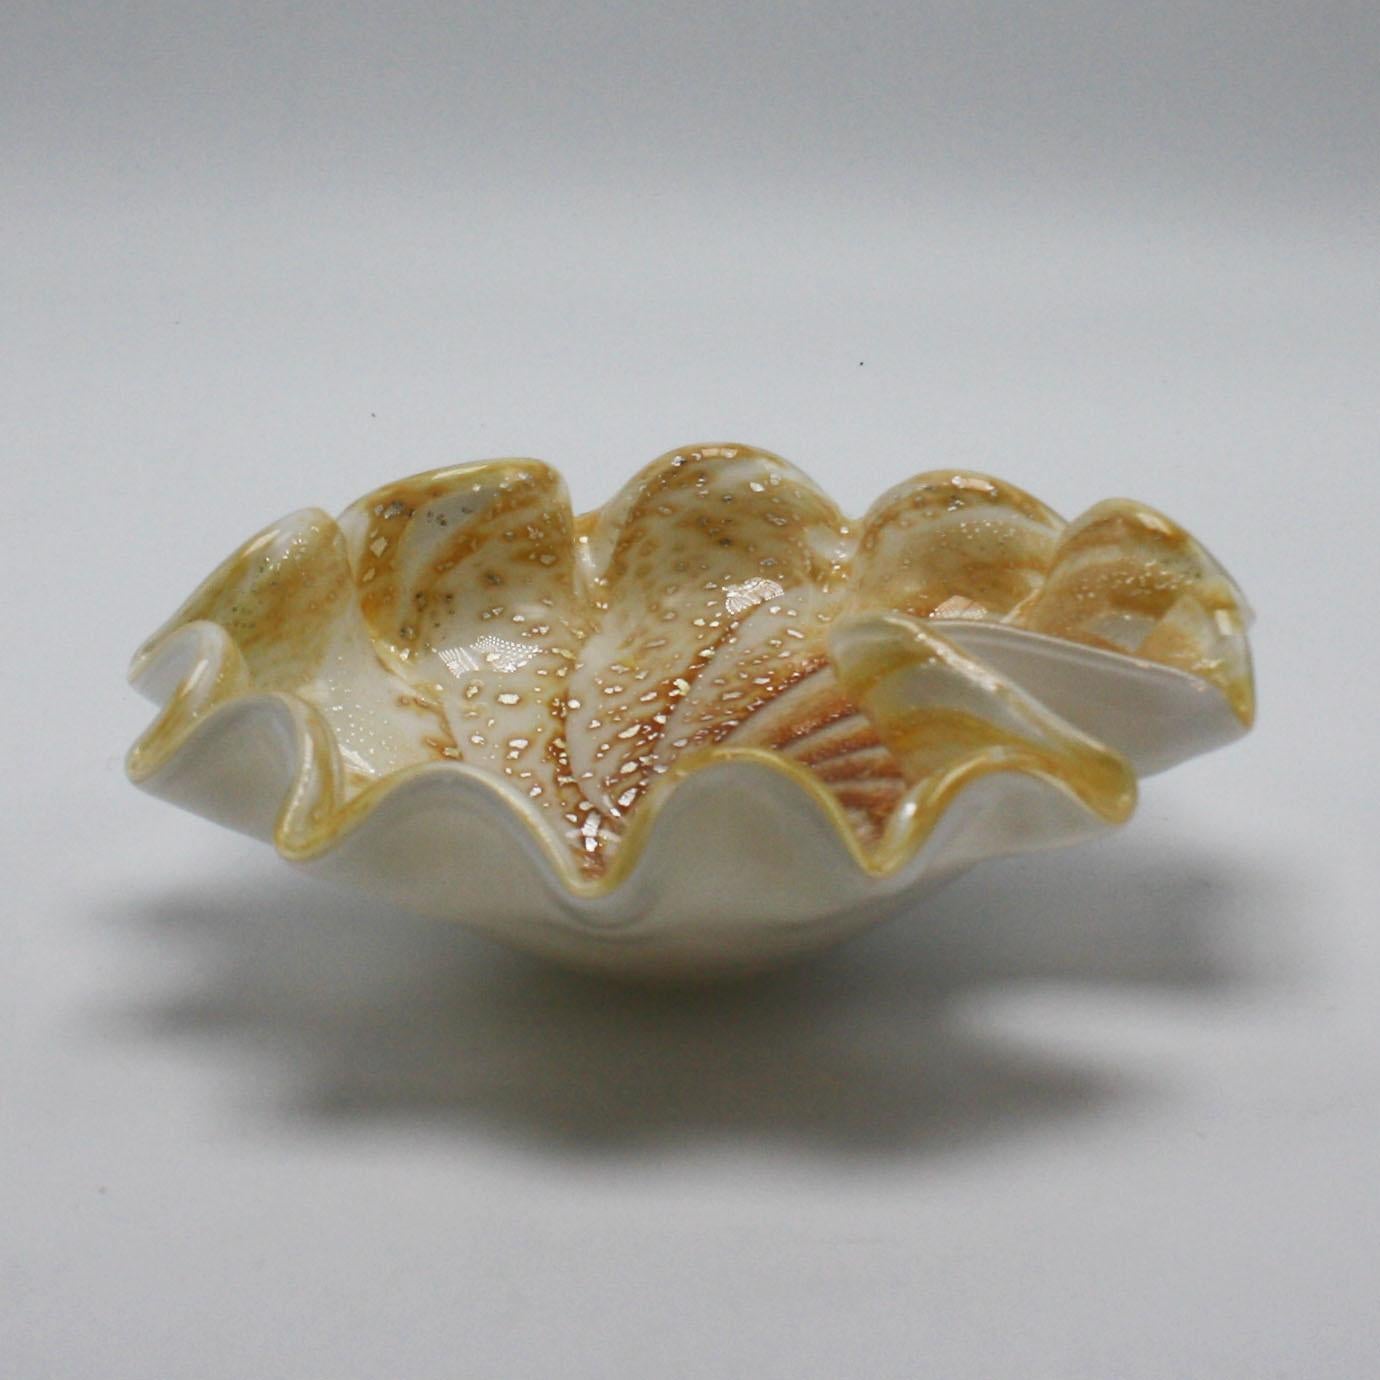 Murano glass shell bowl with gold flecks, circa 1970.
$325.